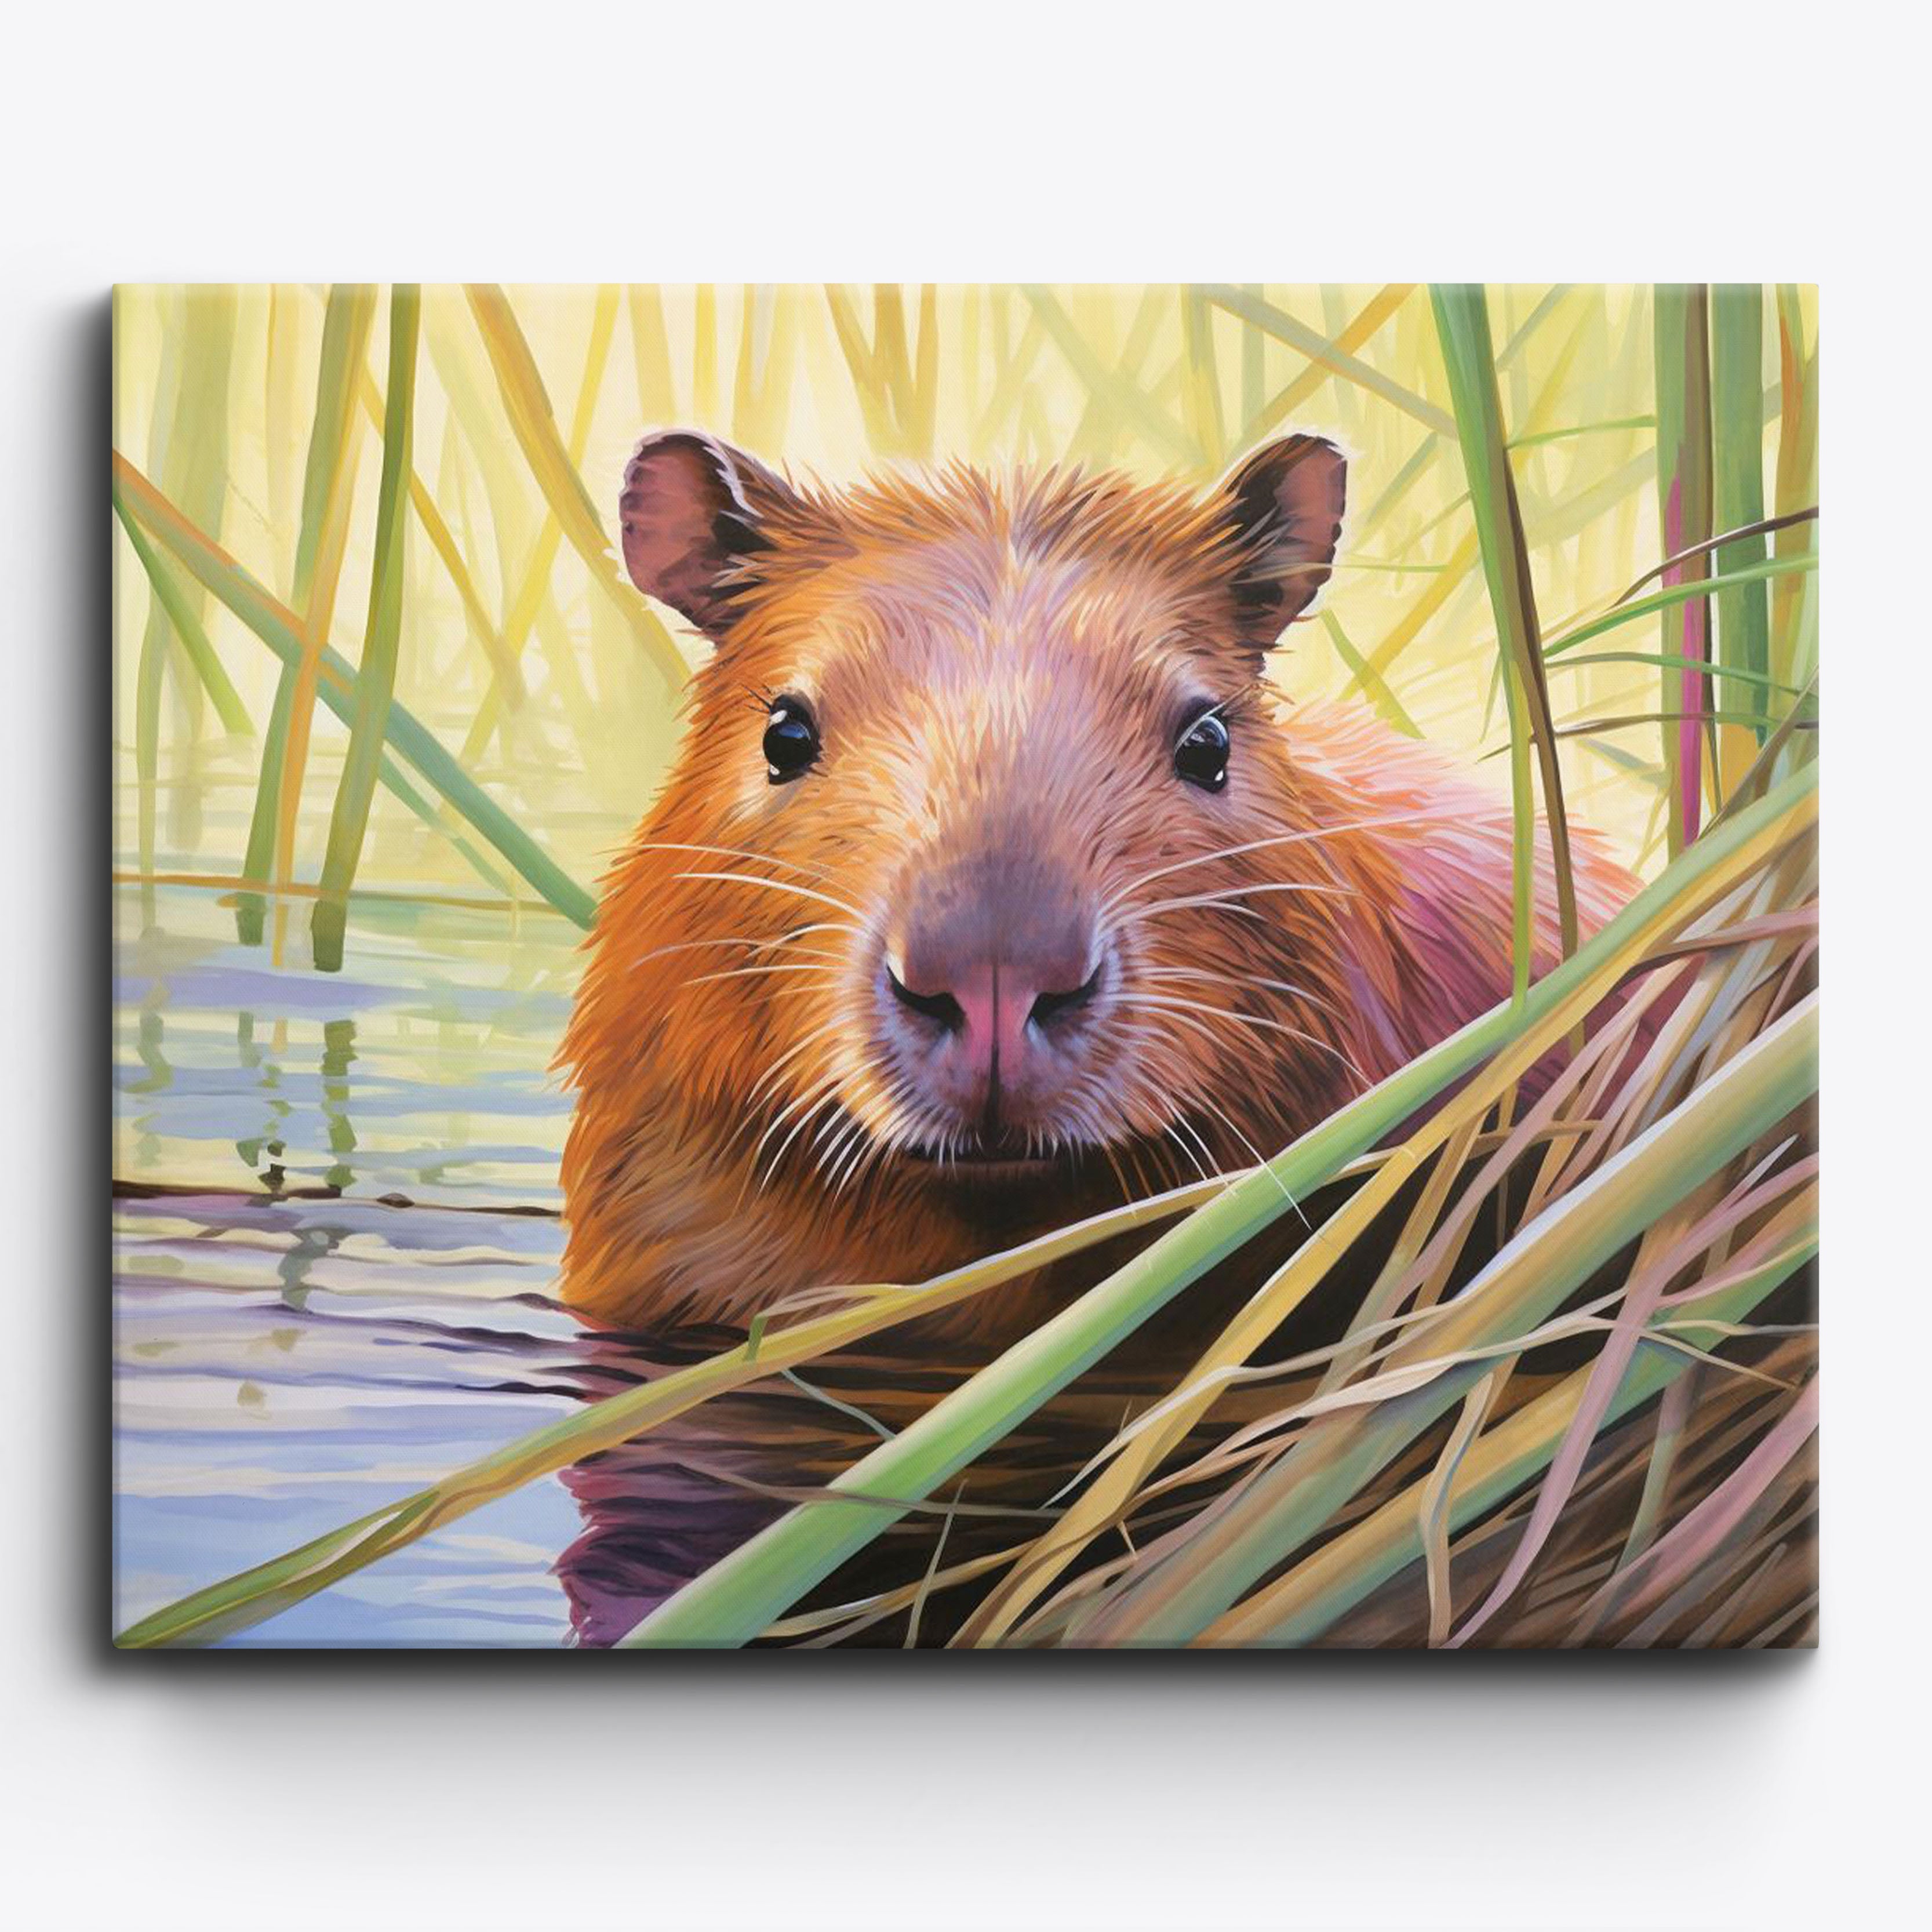 Le regard du capybara au bord du lac